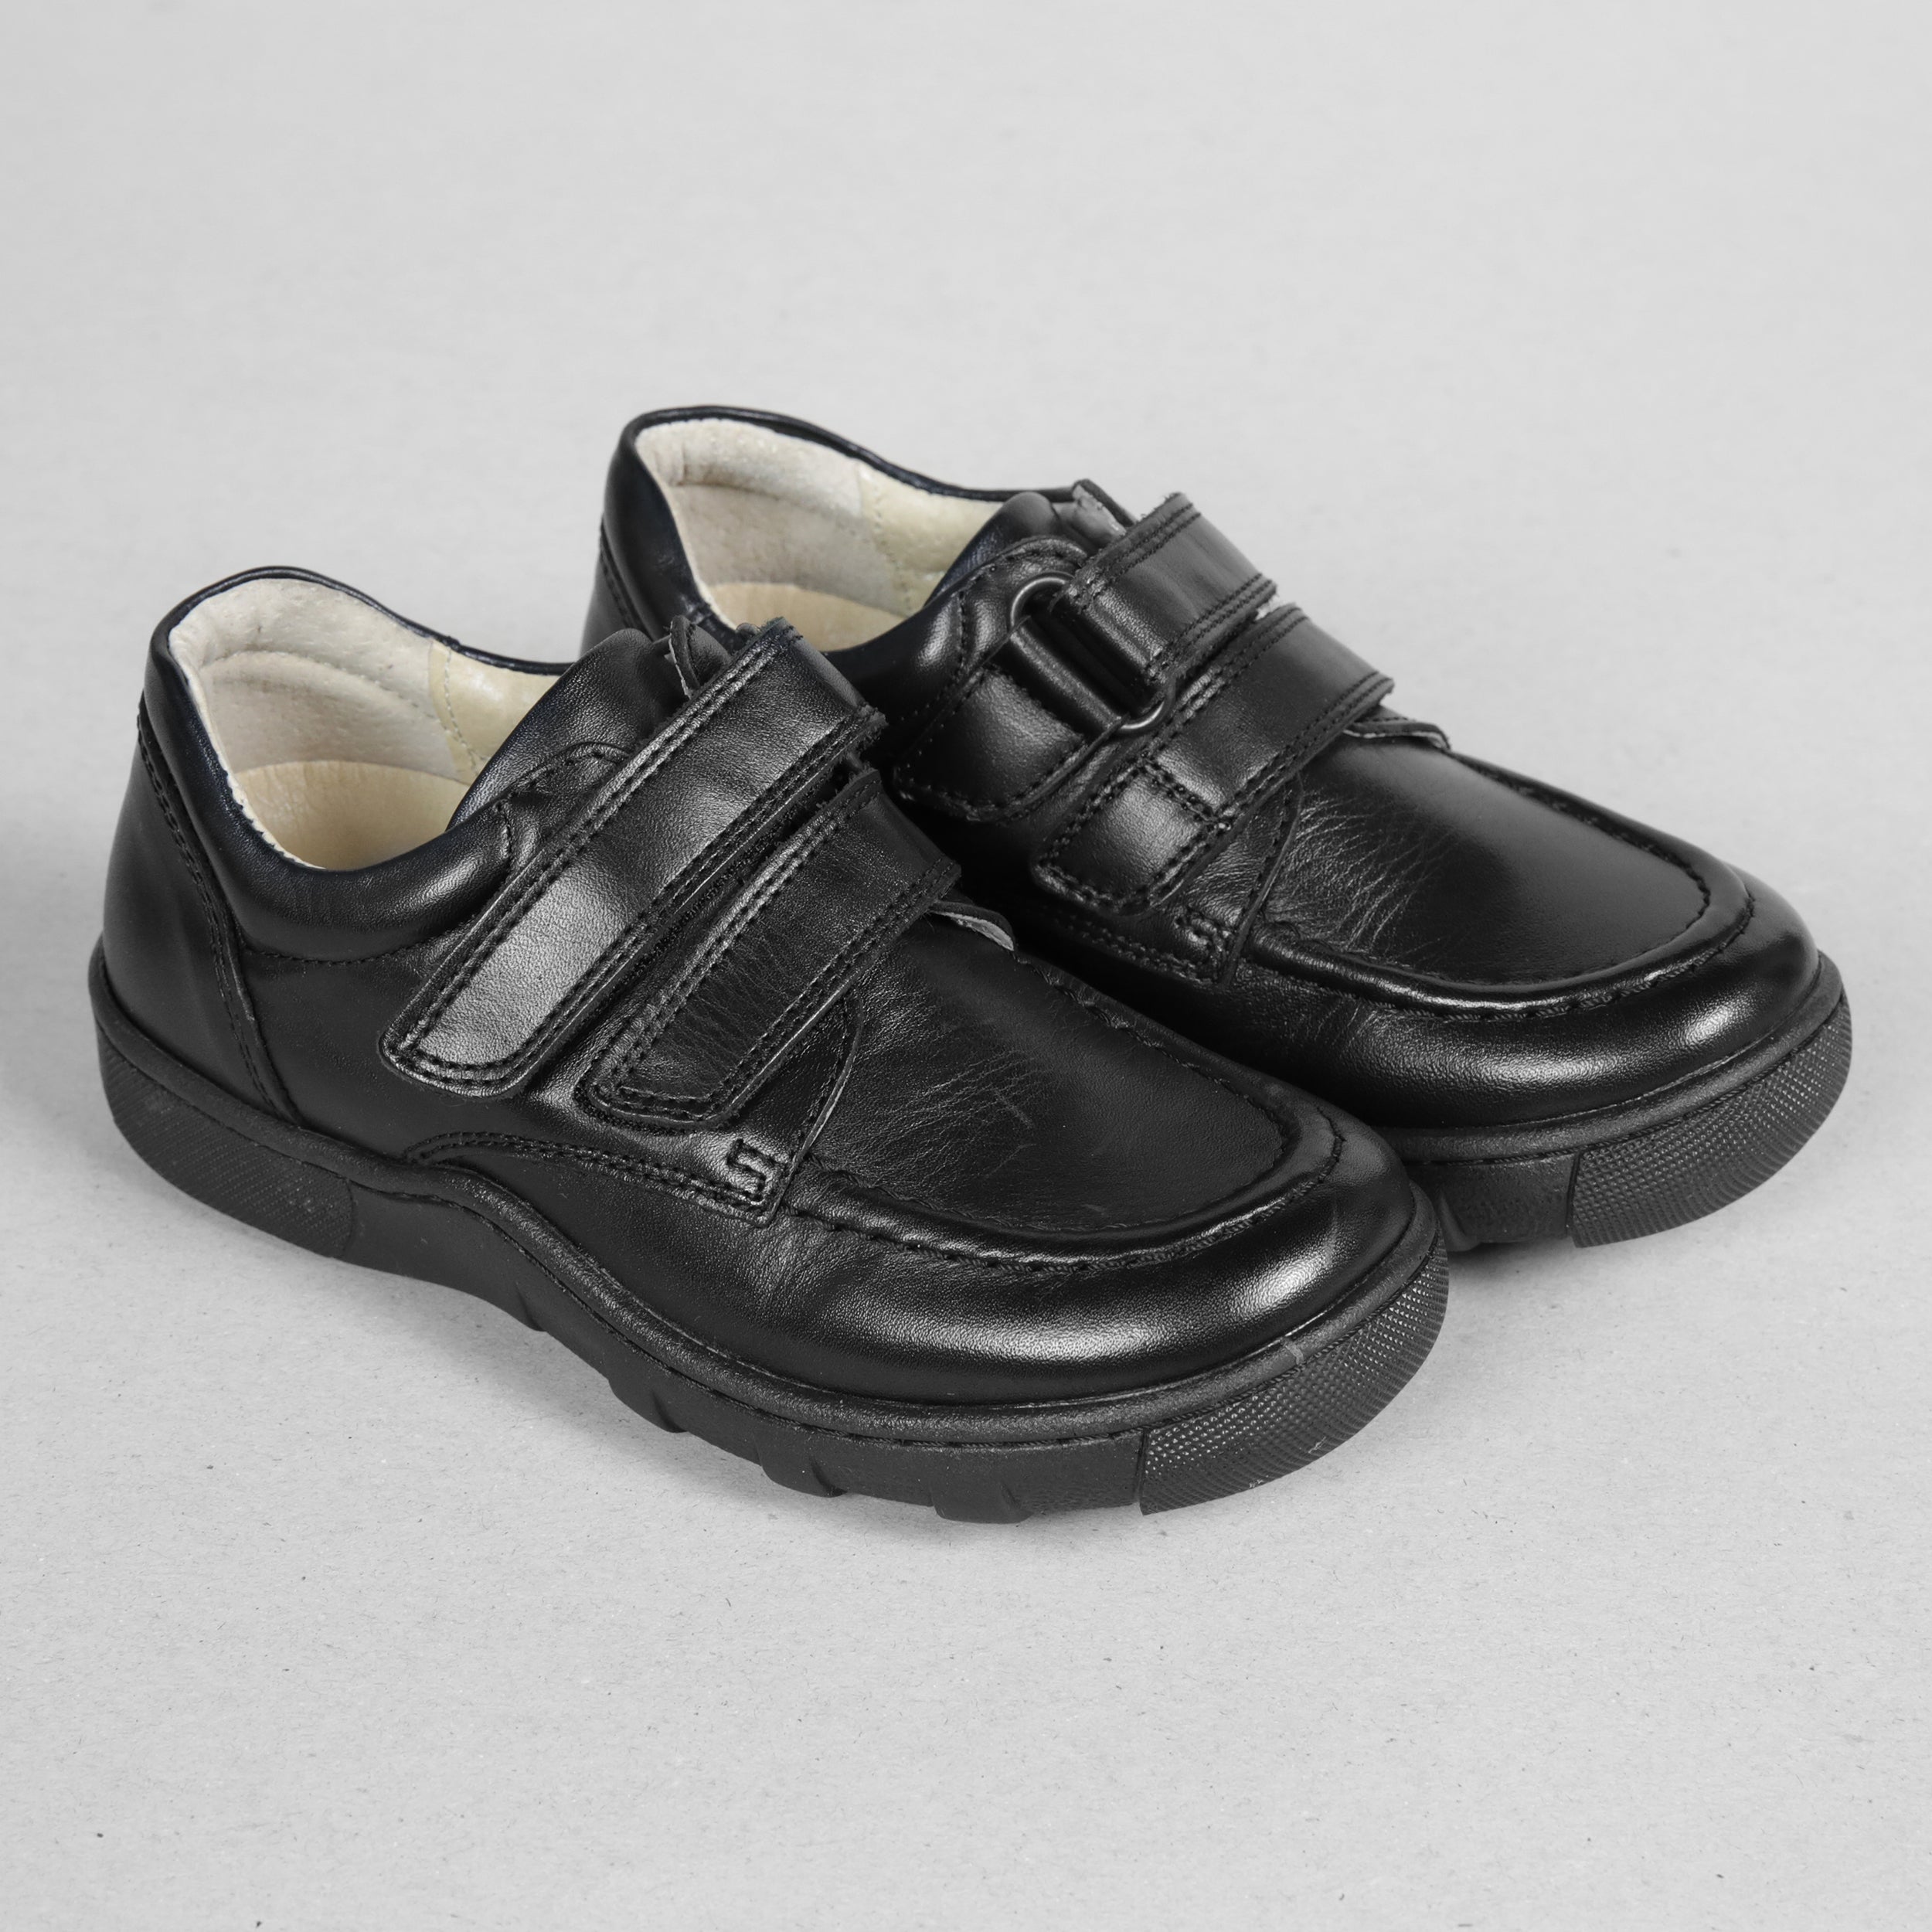 Petasil Pierre Kids Boys Black Leather School Shoes